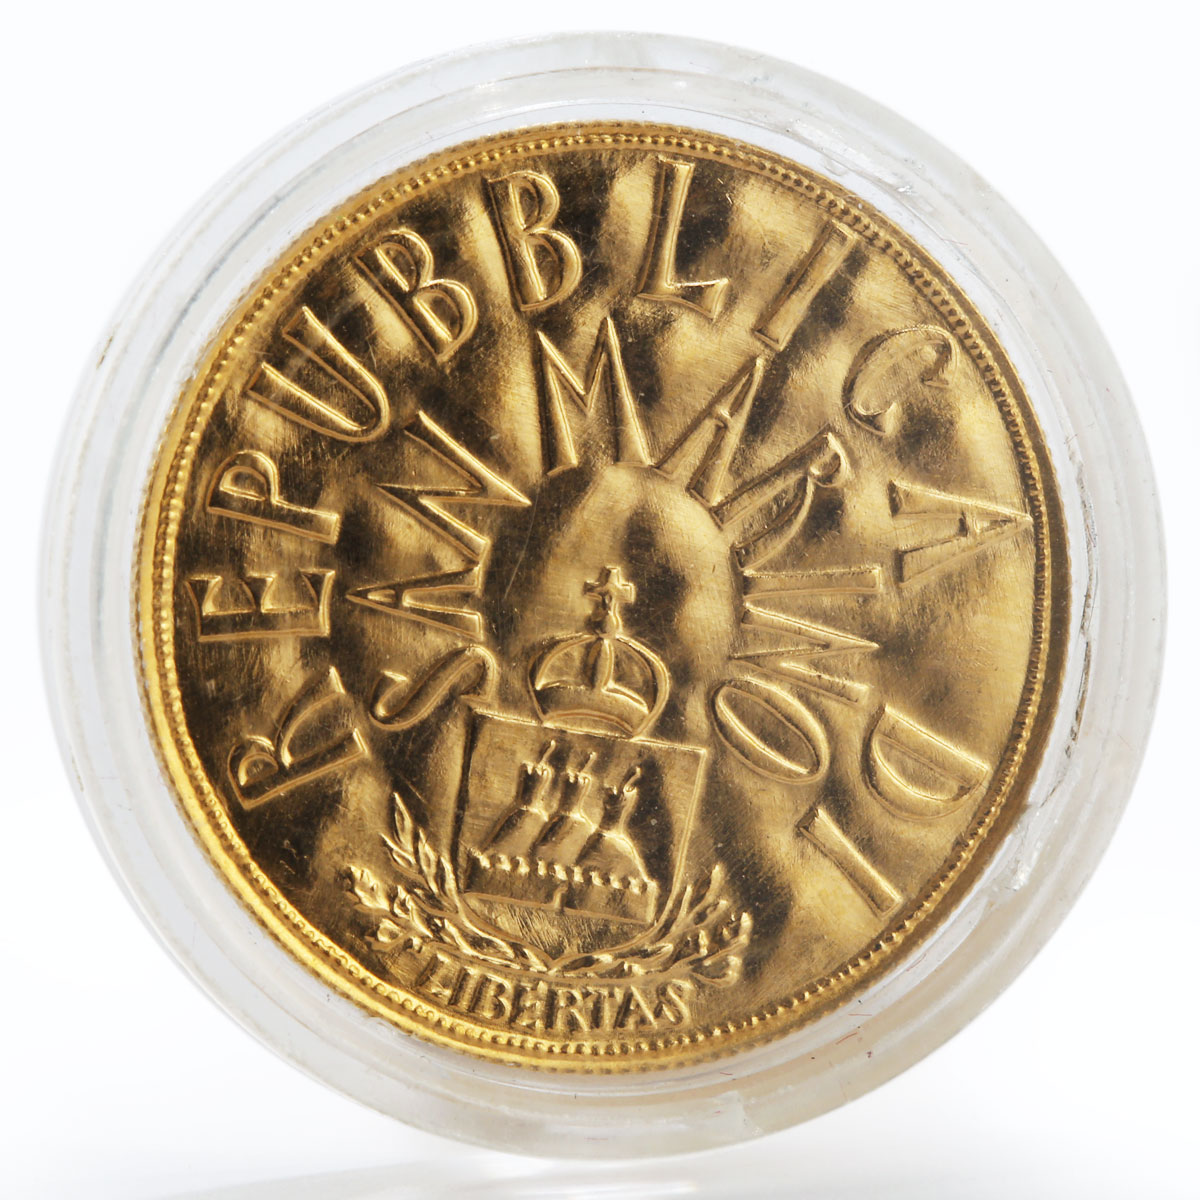 Republica San Marino 5 scudi Libertad Perpetua Freedom gold coin 1983